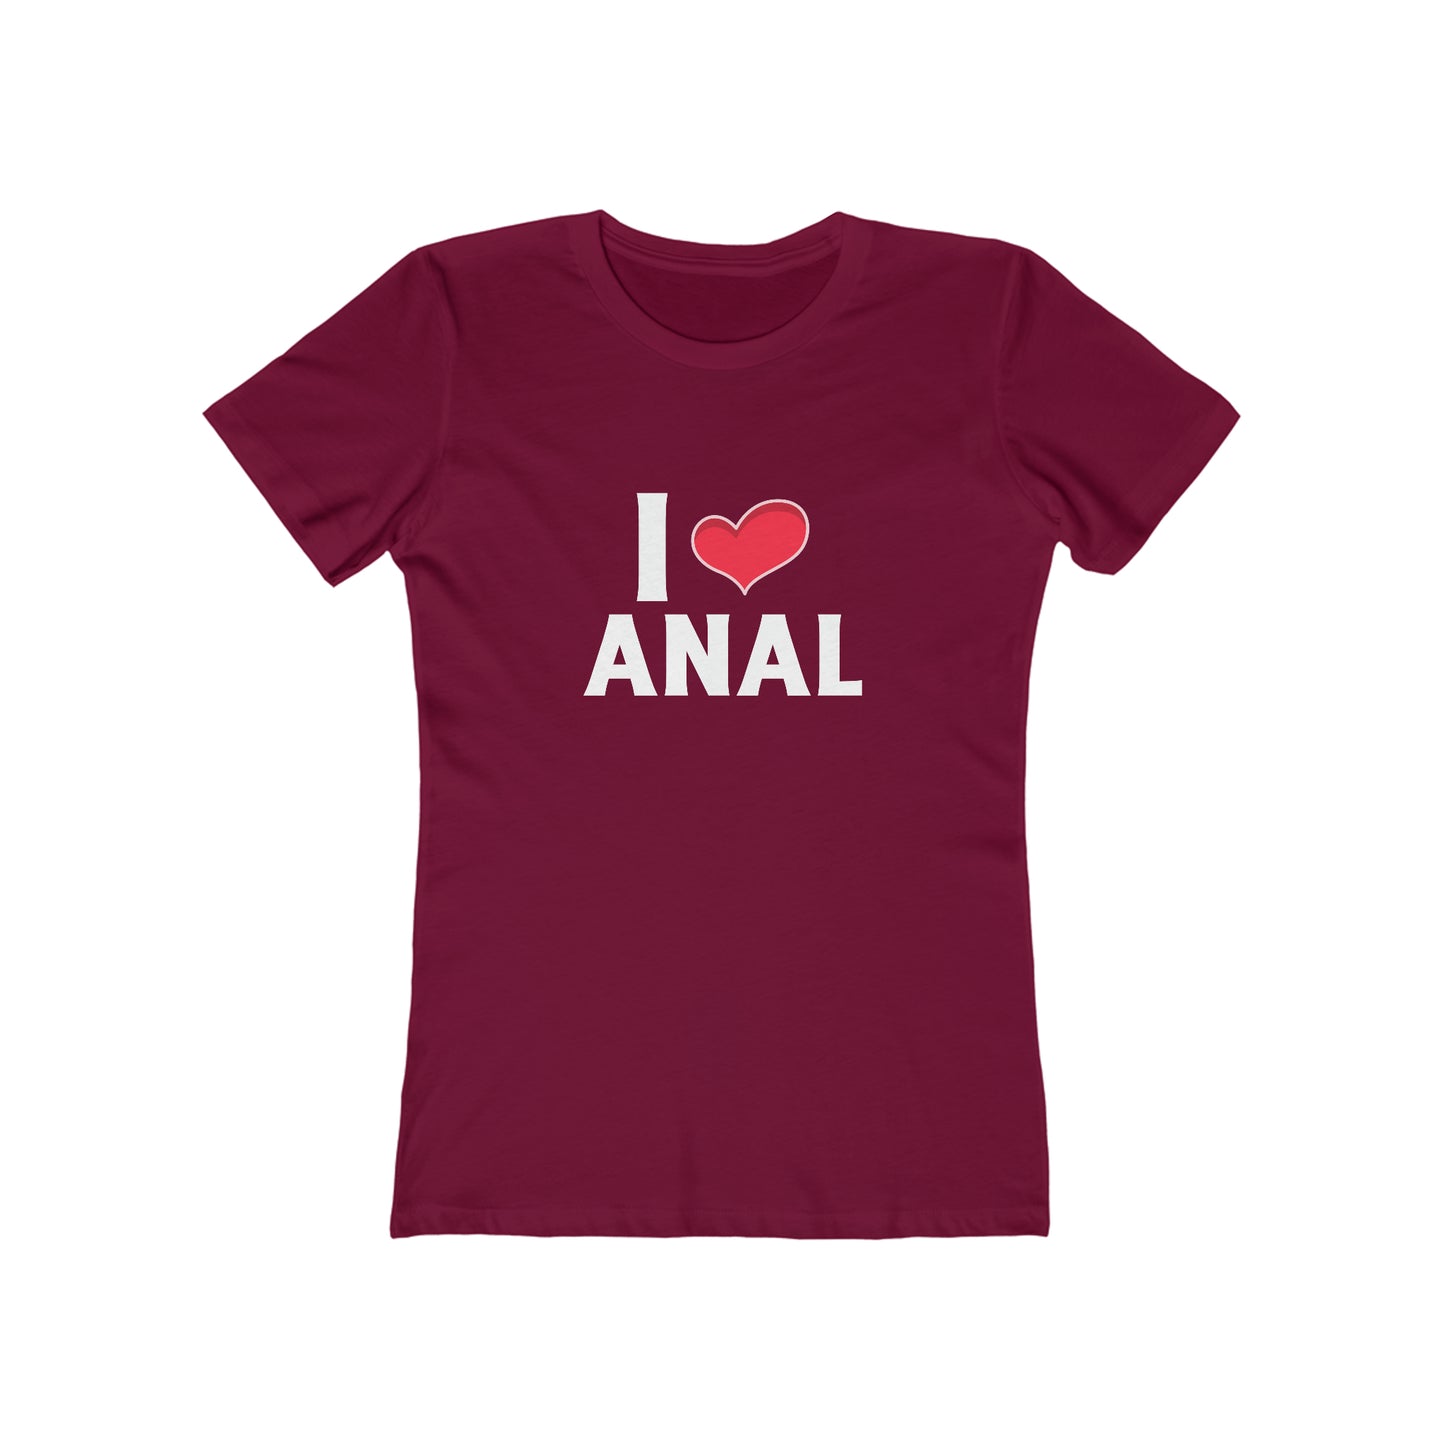 I Heart Anal - Women's T-shirt